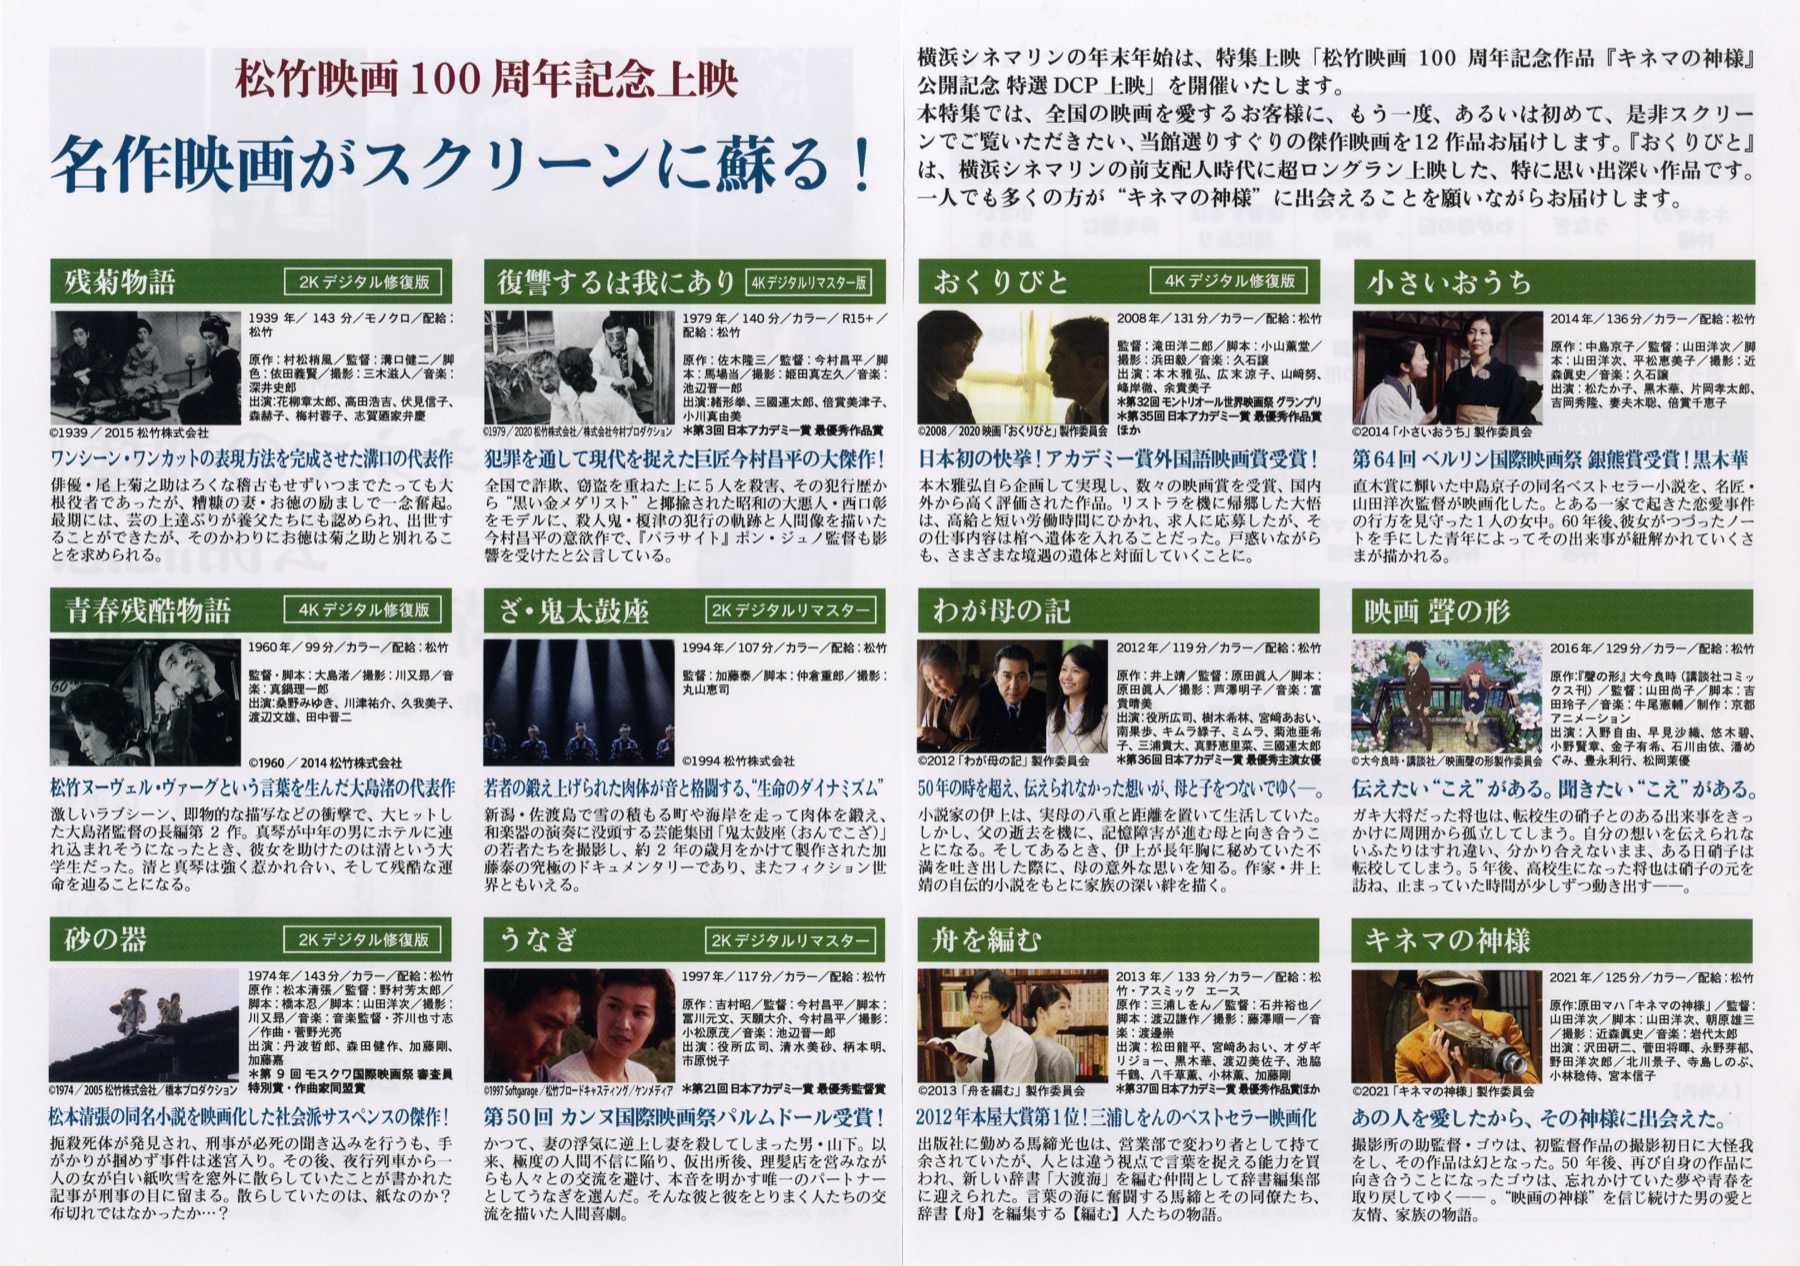 松竹映画100周年記念上映 キネマの神様公開記念特選DCP上映